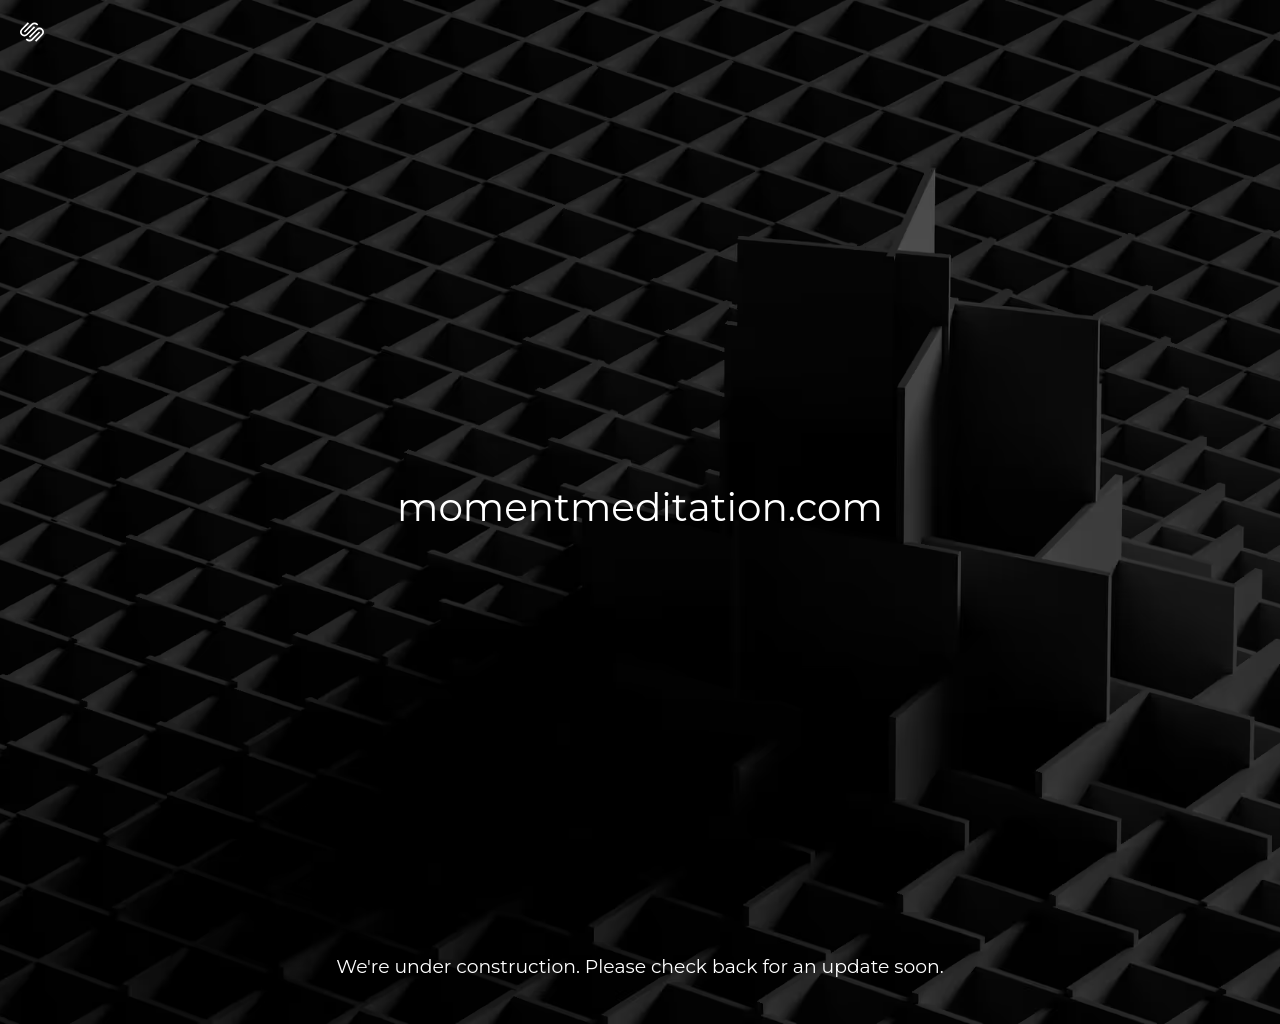 momentmeditation.com